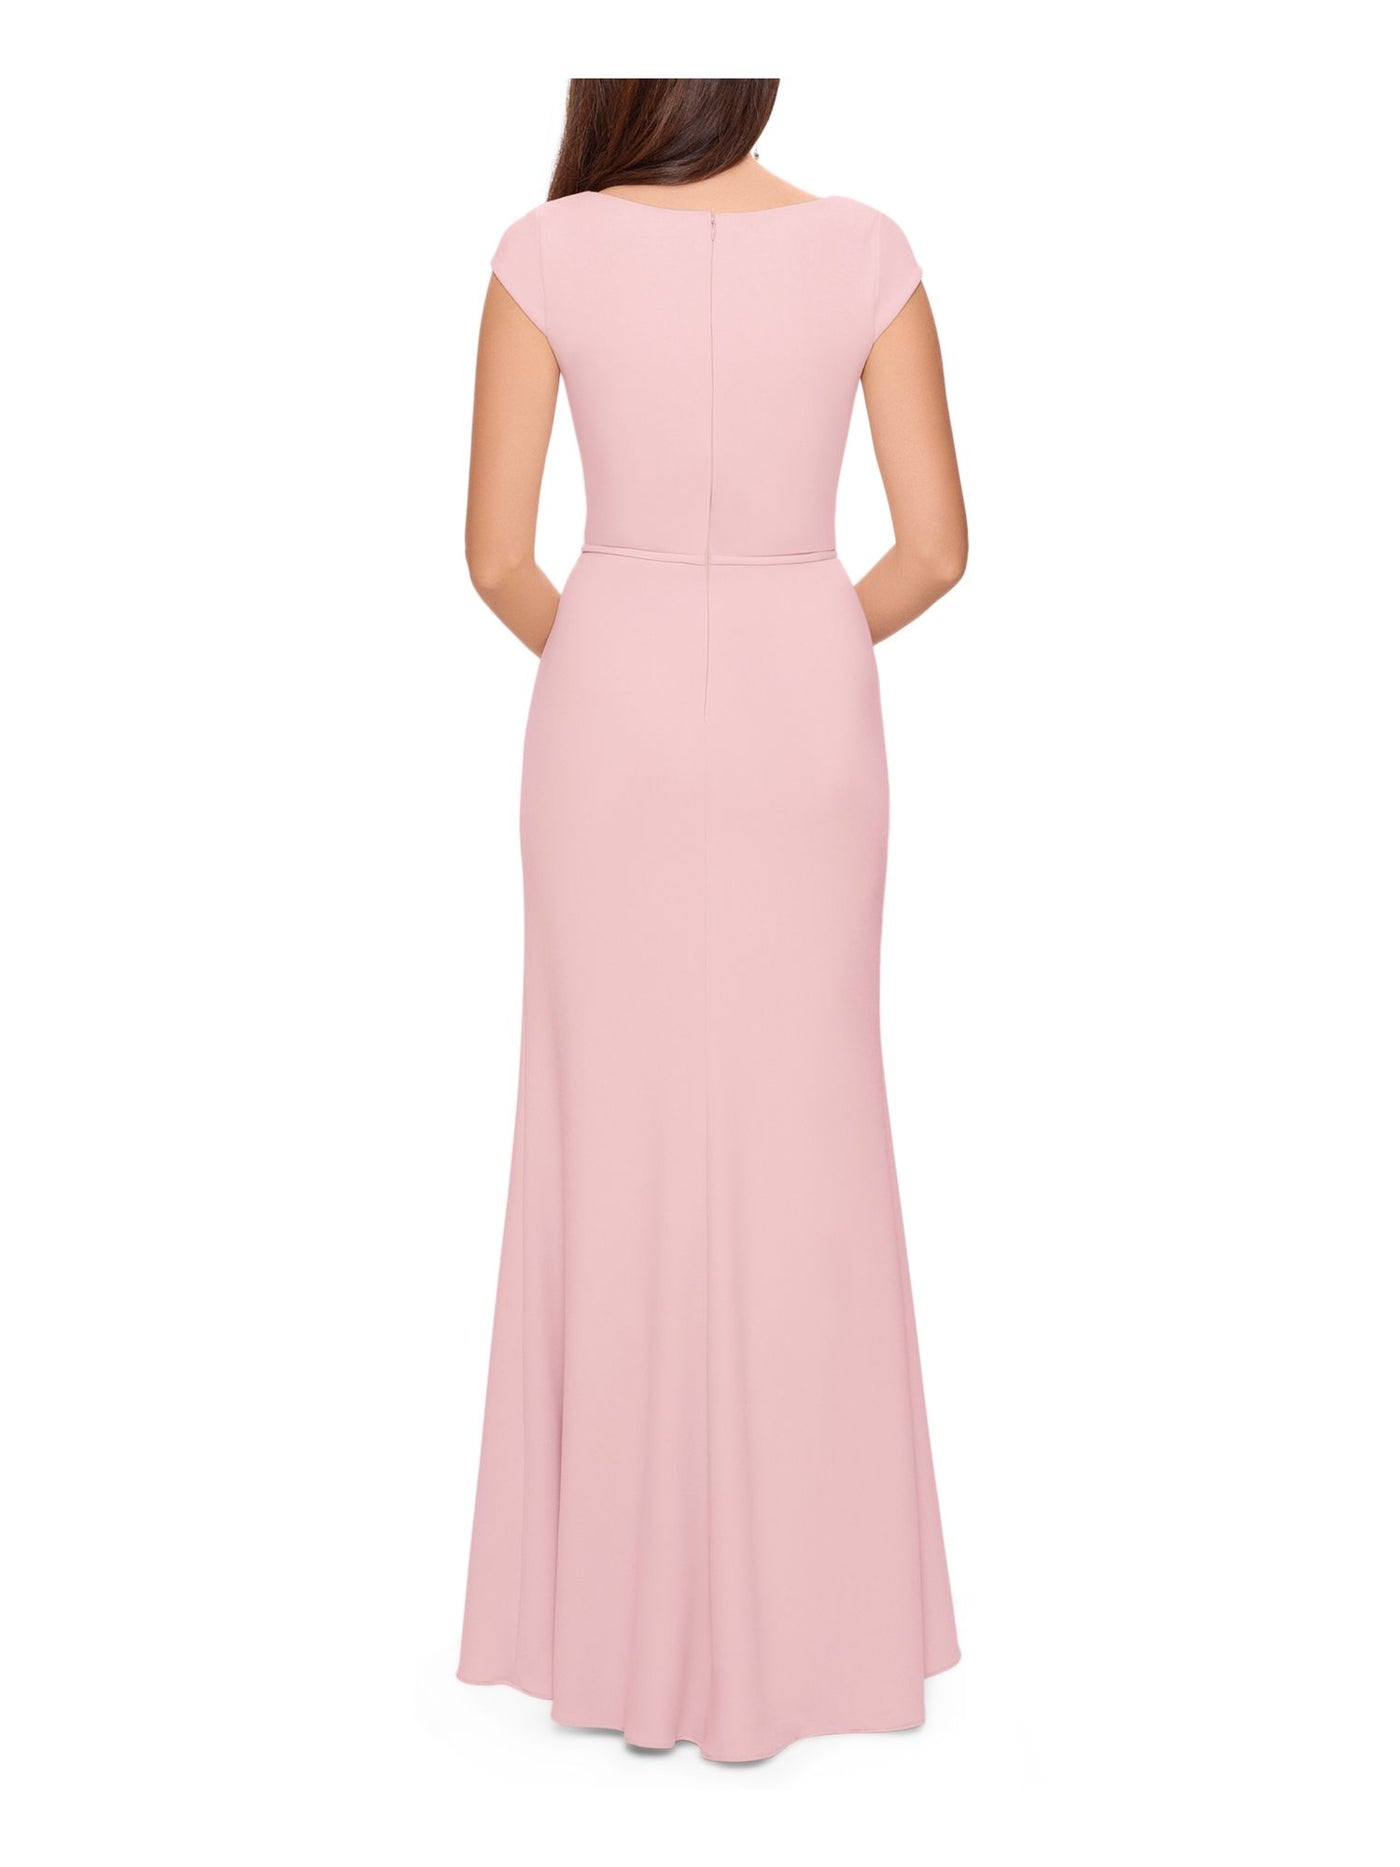 BETSY & ADAM Womens Pink Zippered Ruffled Slitted Cap Sleeve Asymmetrical Neckline Full-Length Formal Gown Dress Petites 6P